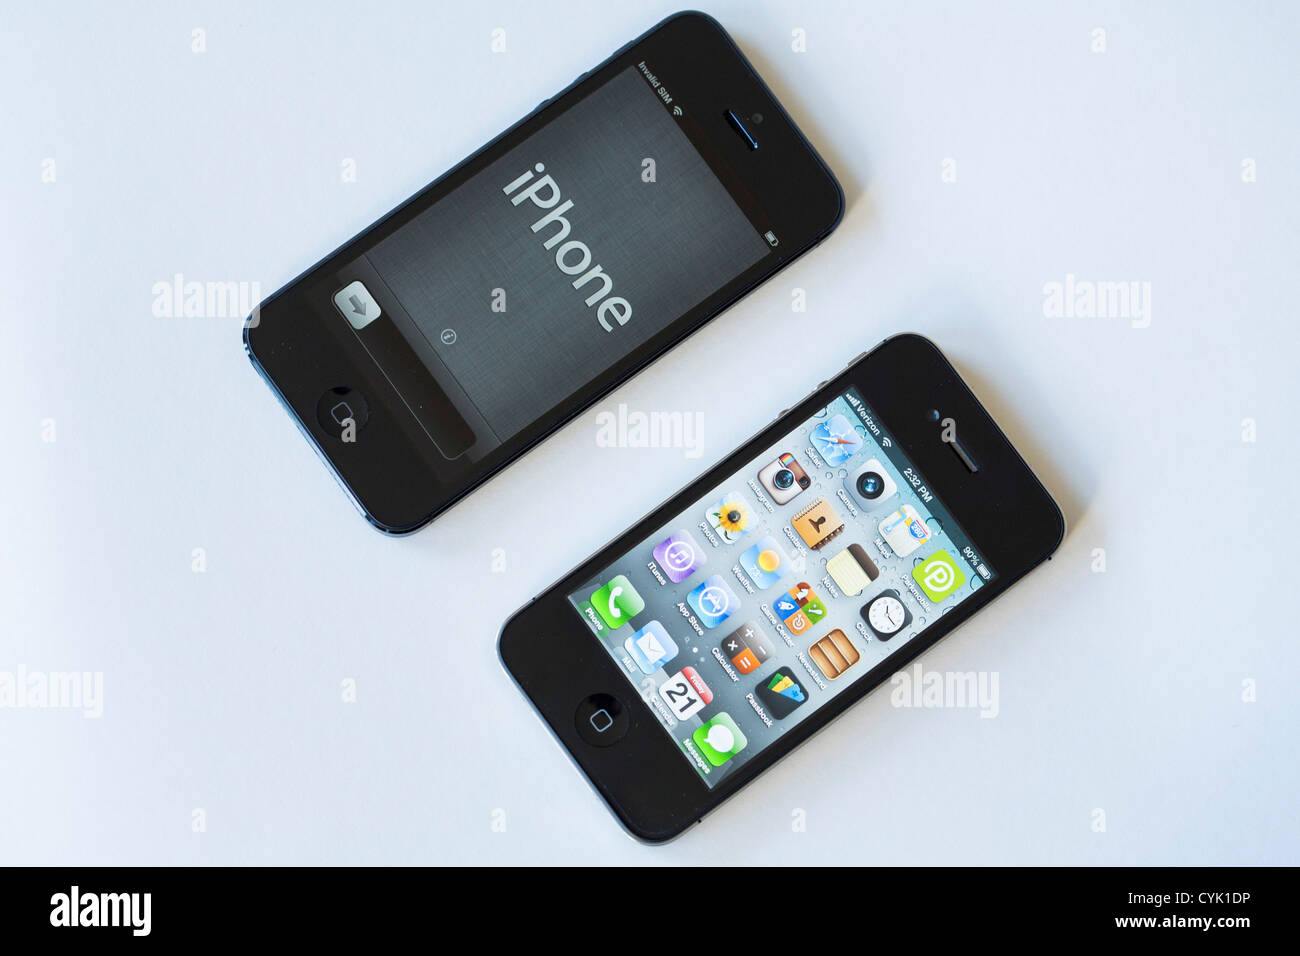 Apple iphone 5 weiß — Redaktionelles Stockfoto © eranicle #19040605